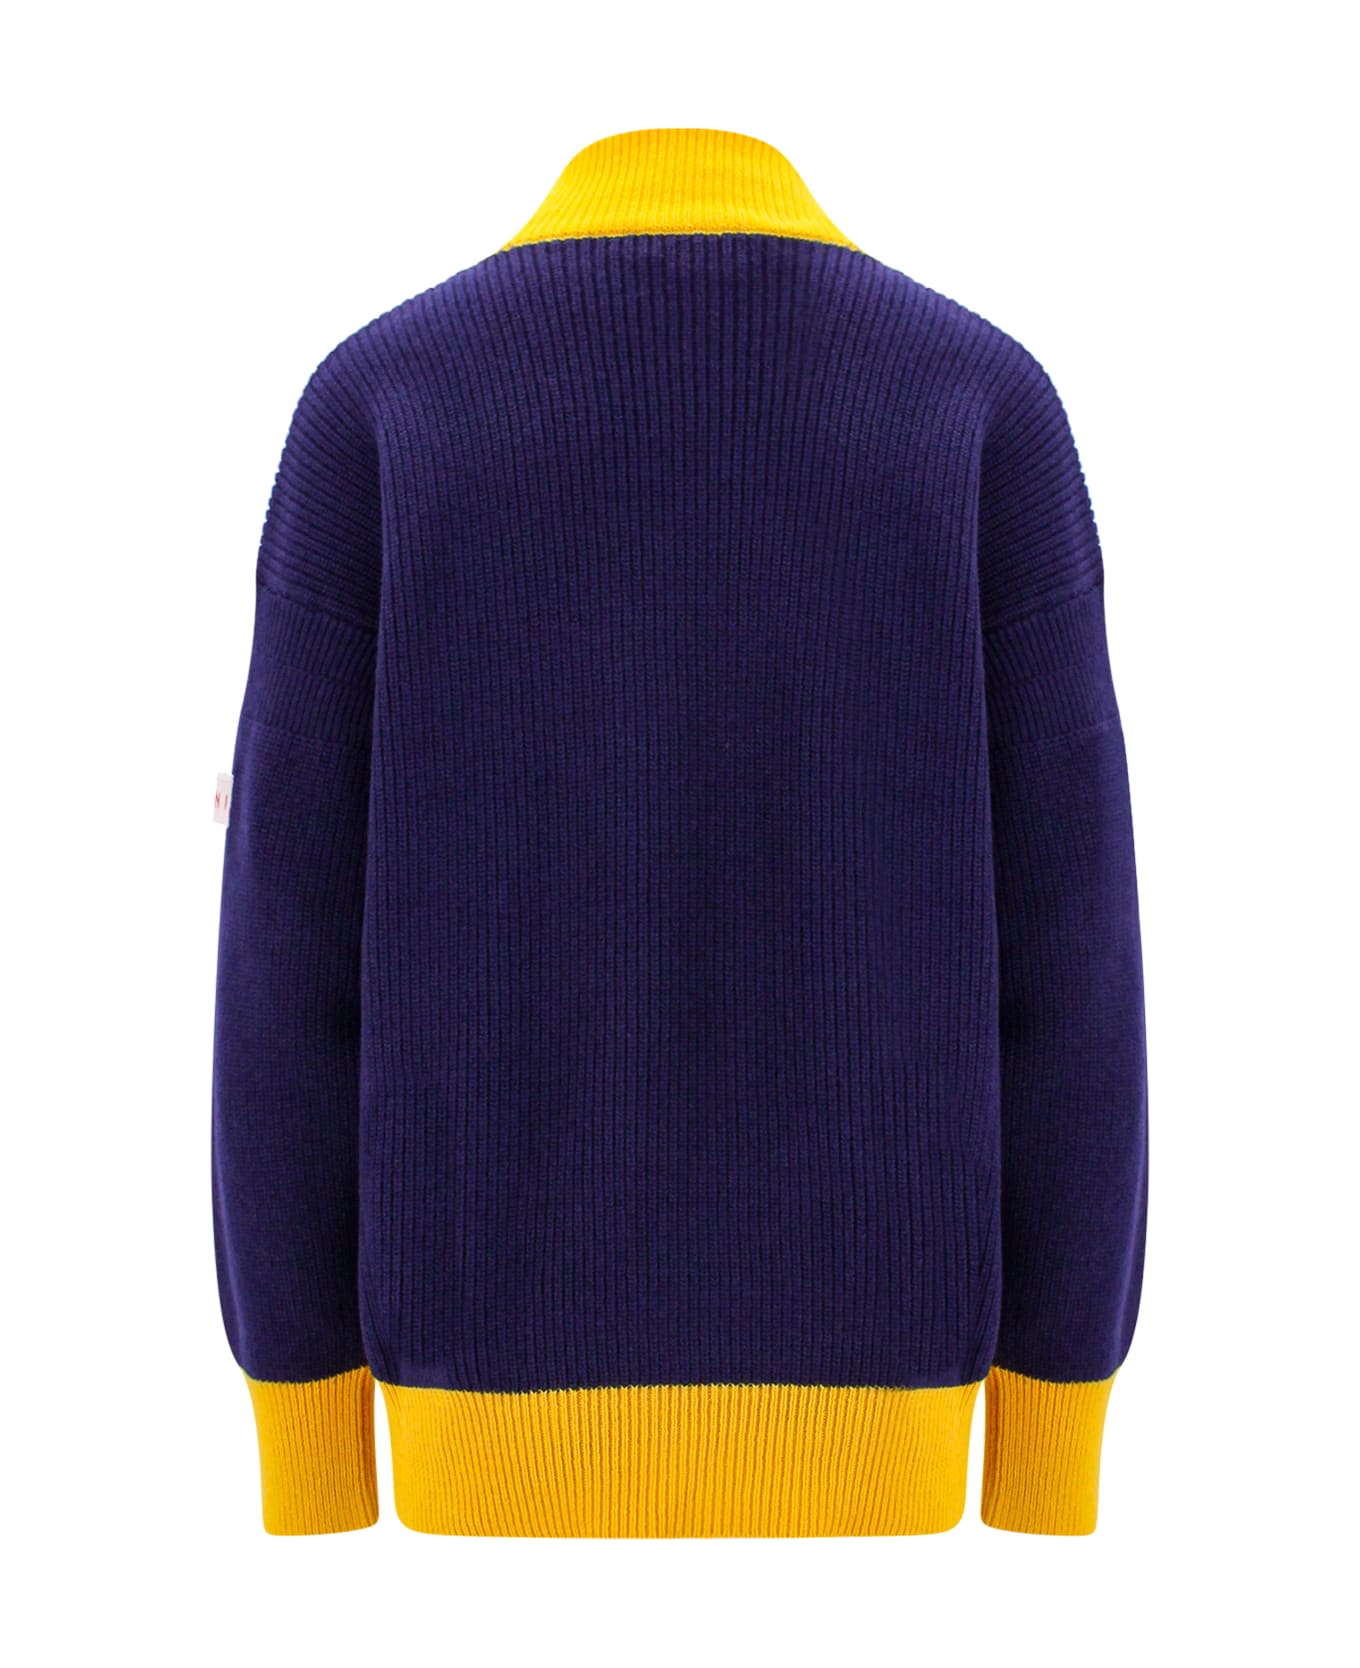 Marni Sweater - Blue ニットウェア